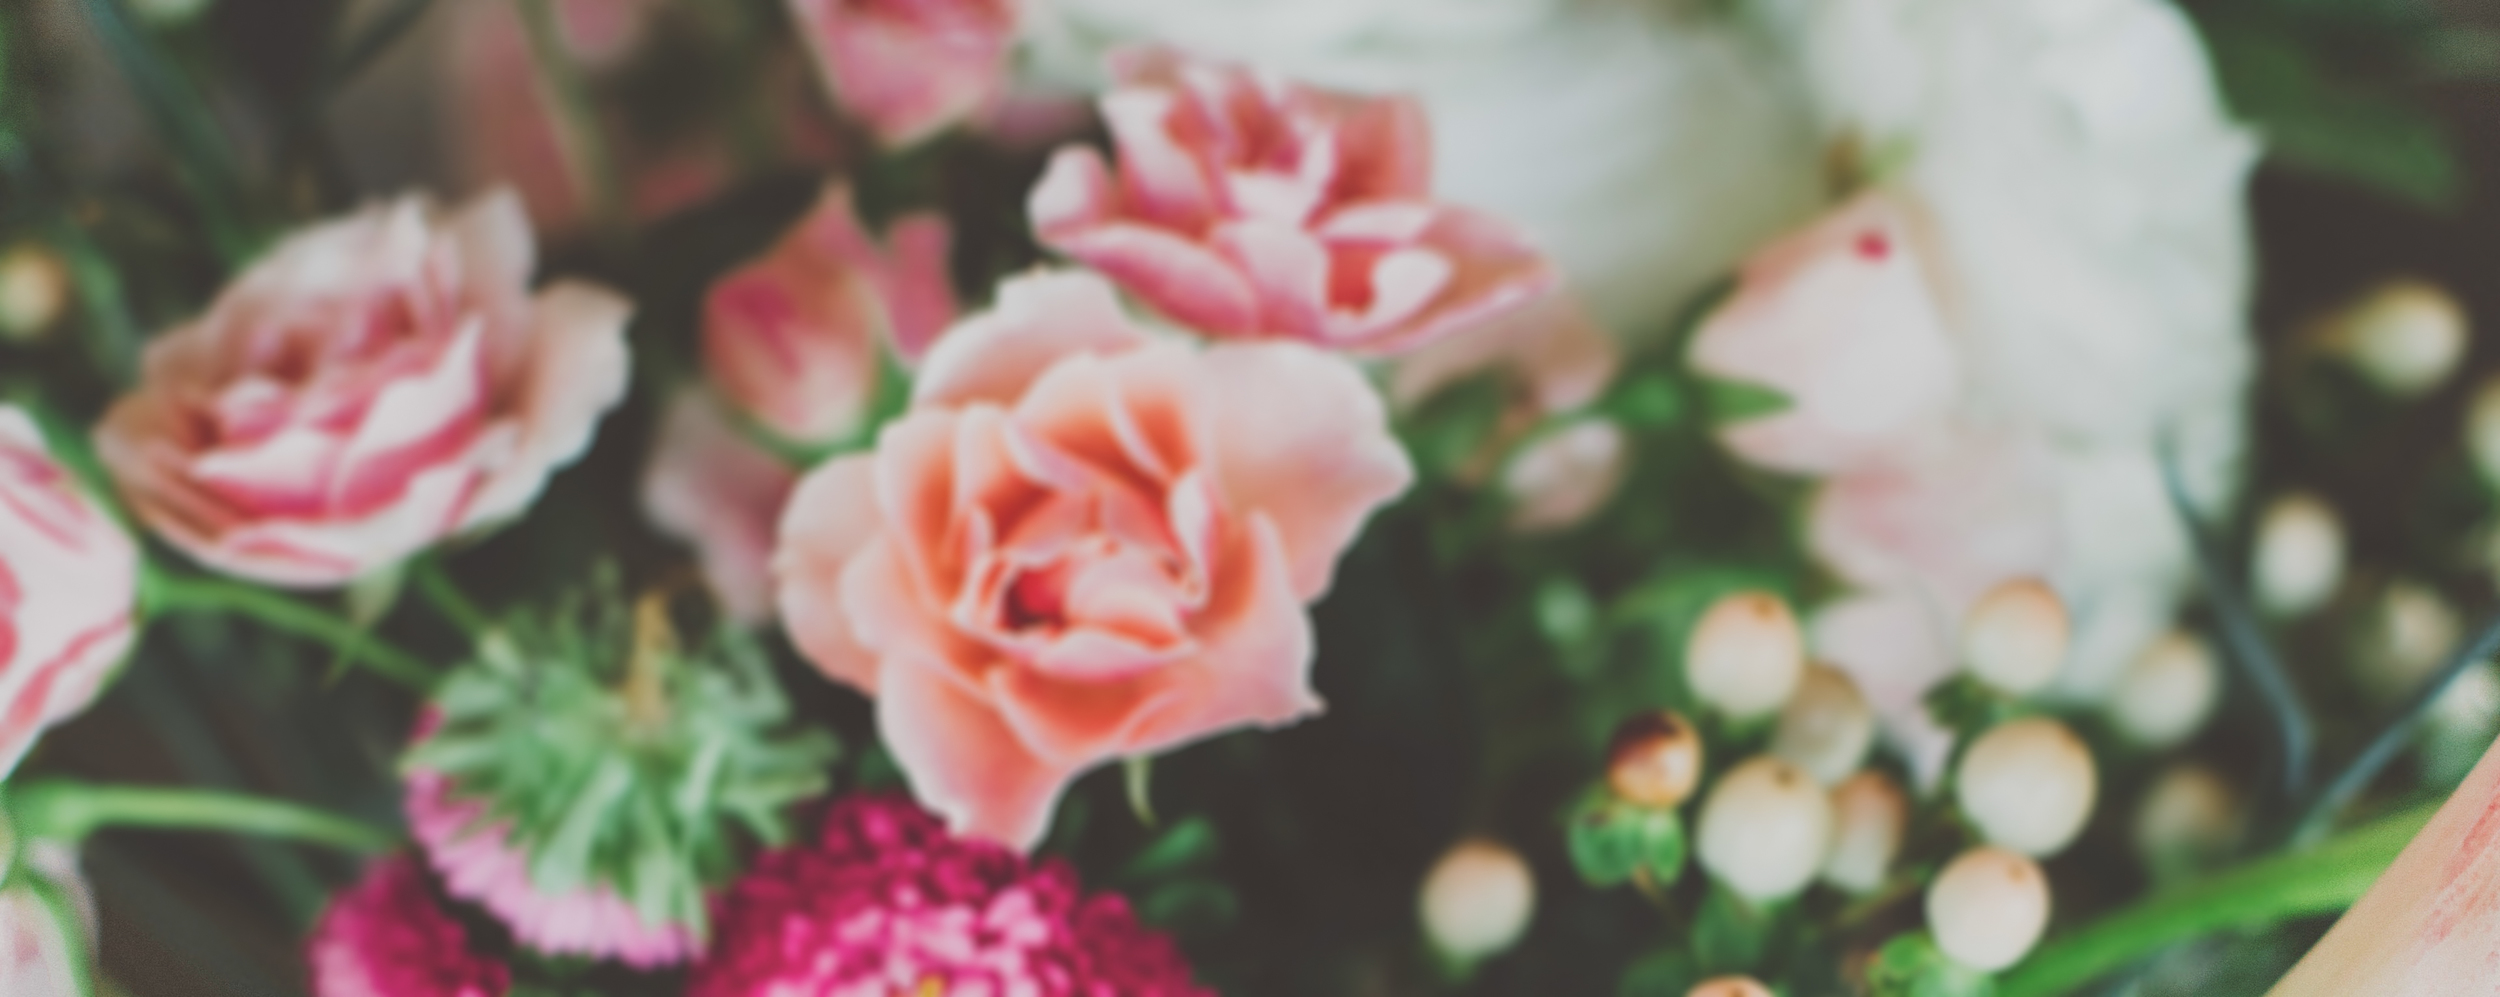 Blurry Flowers (1 of 1).jpg